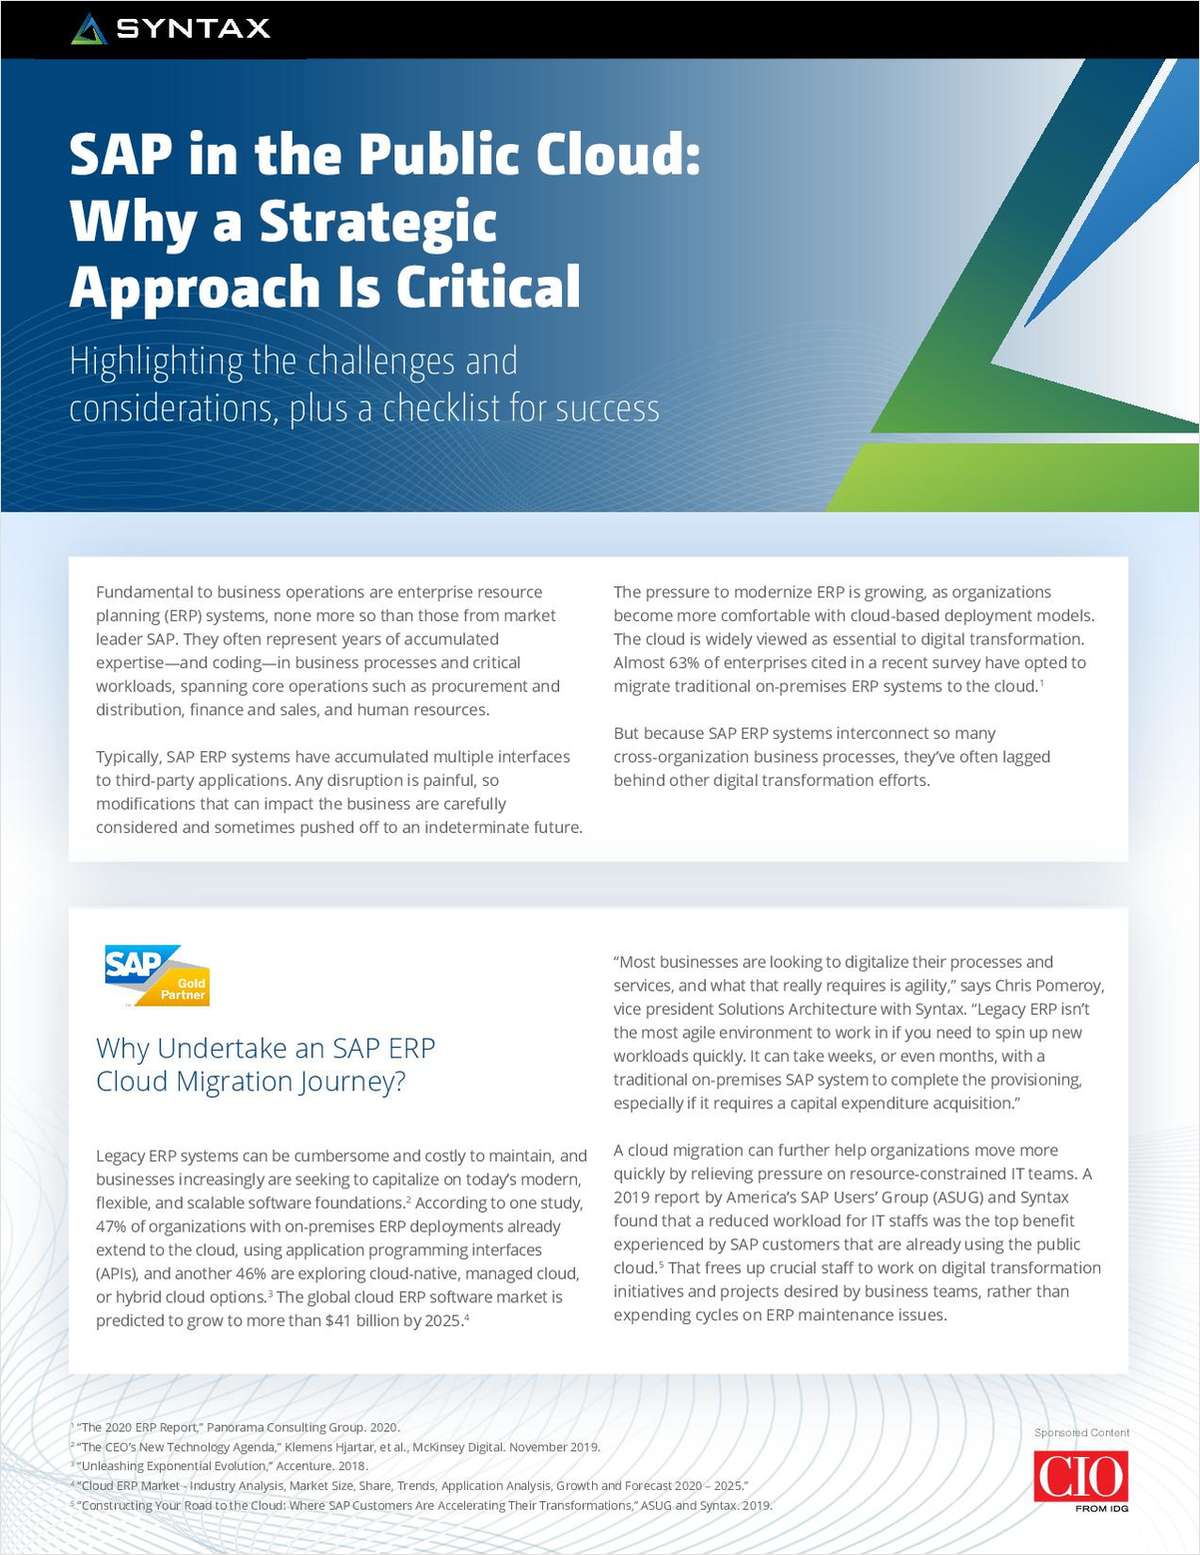 SAP in the Public Cloud: Why a Strategic Approach is Critical